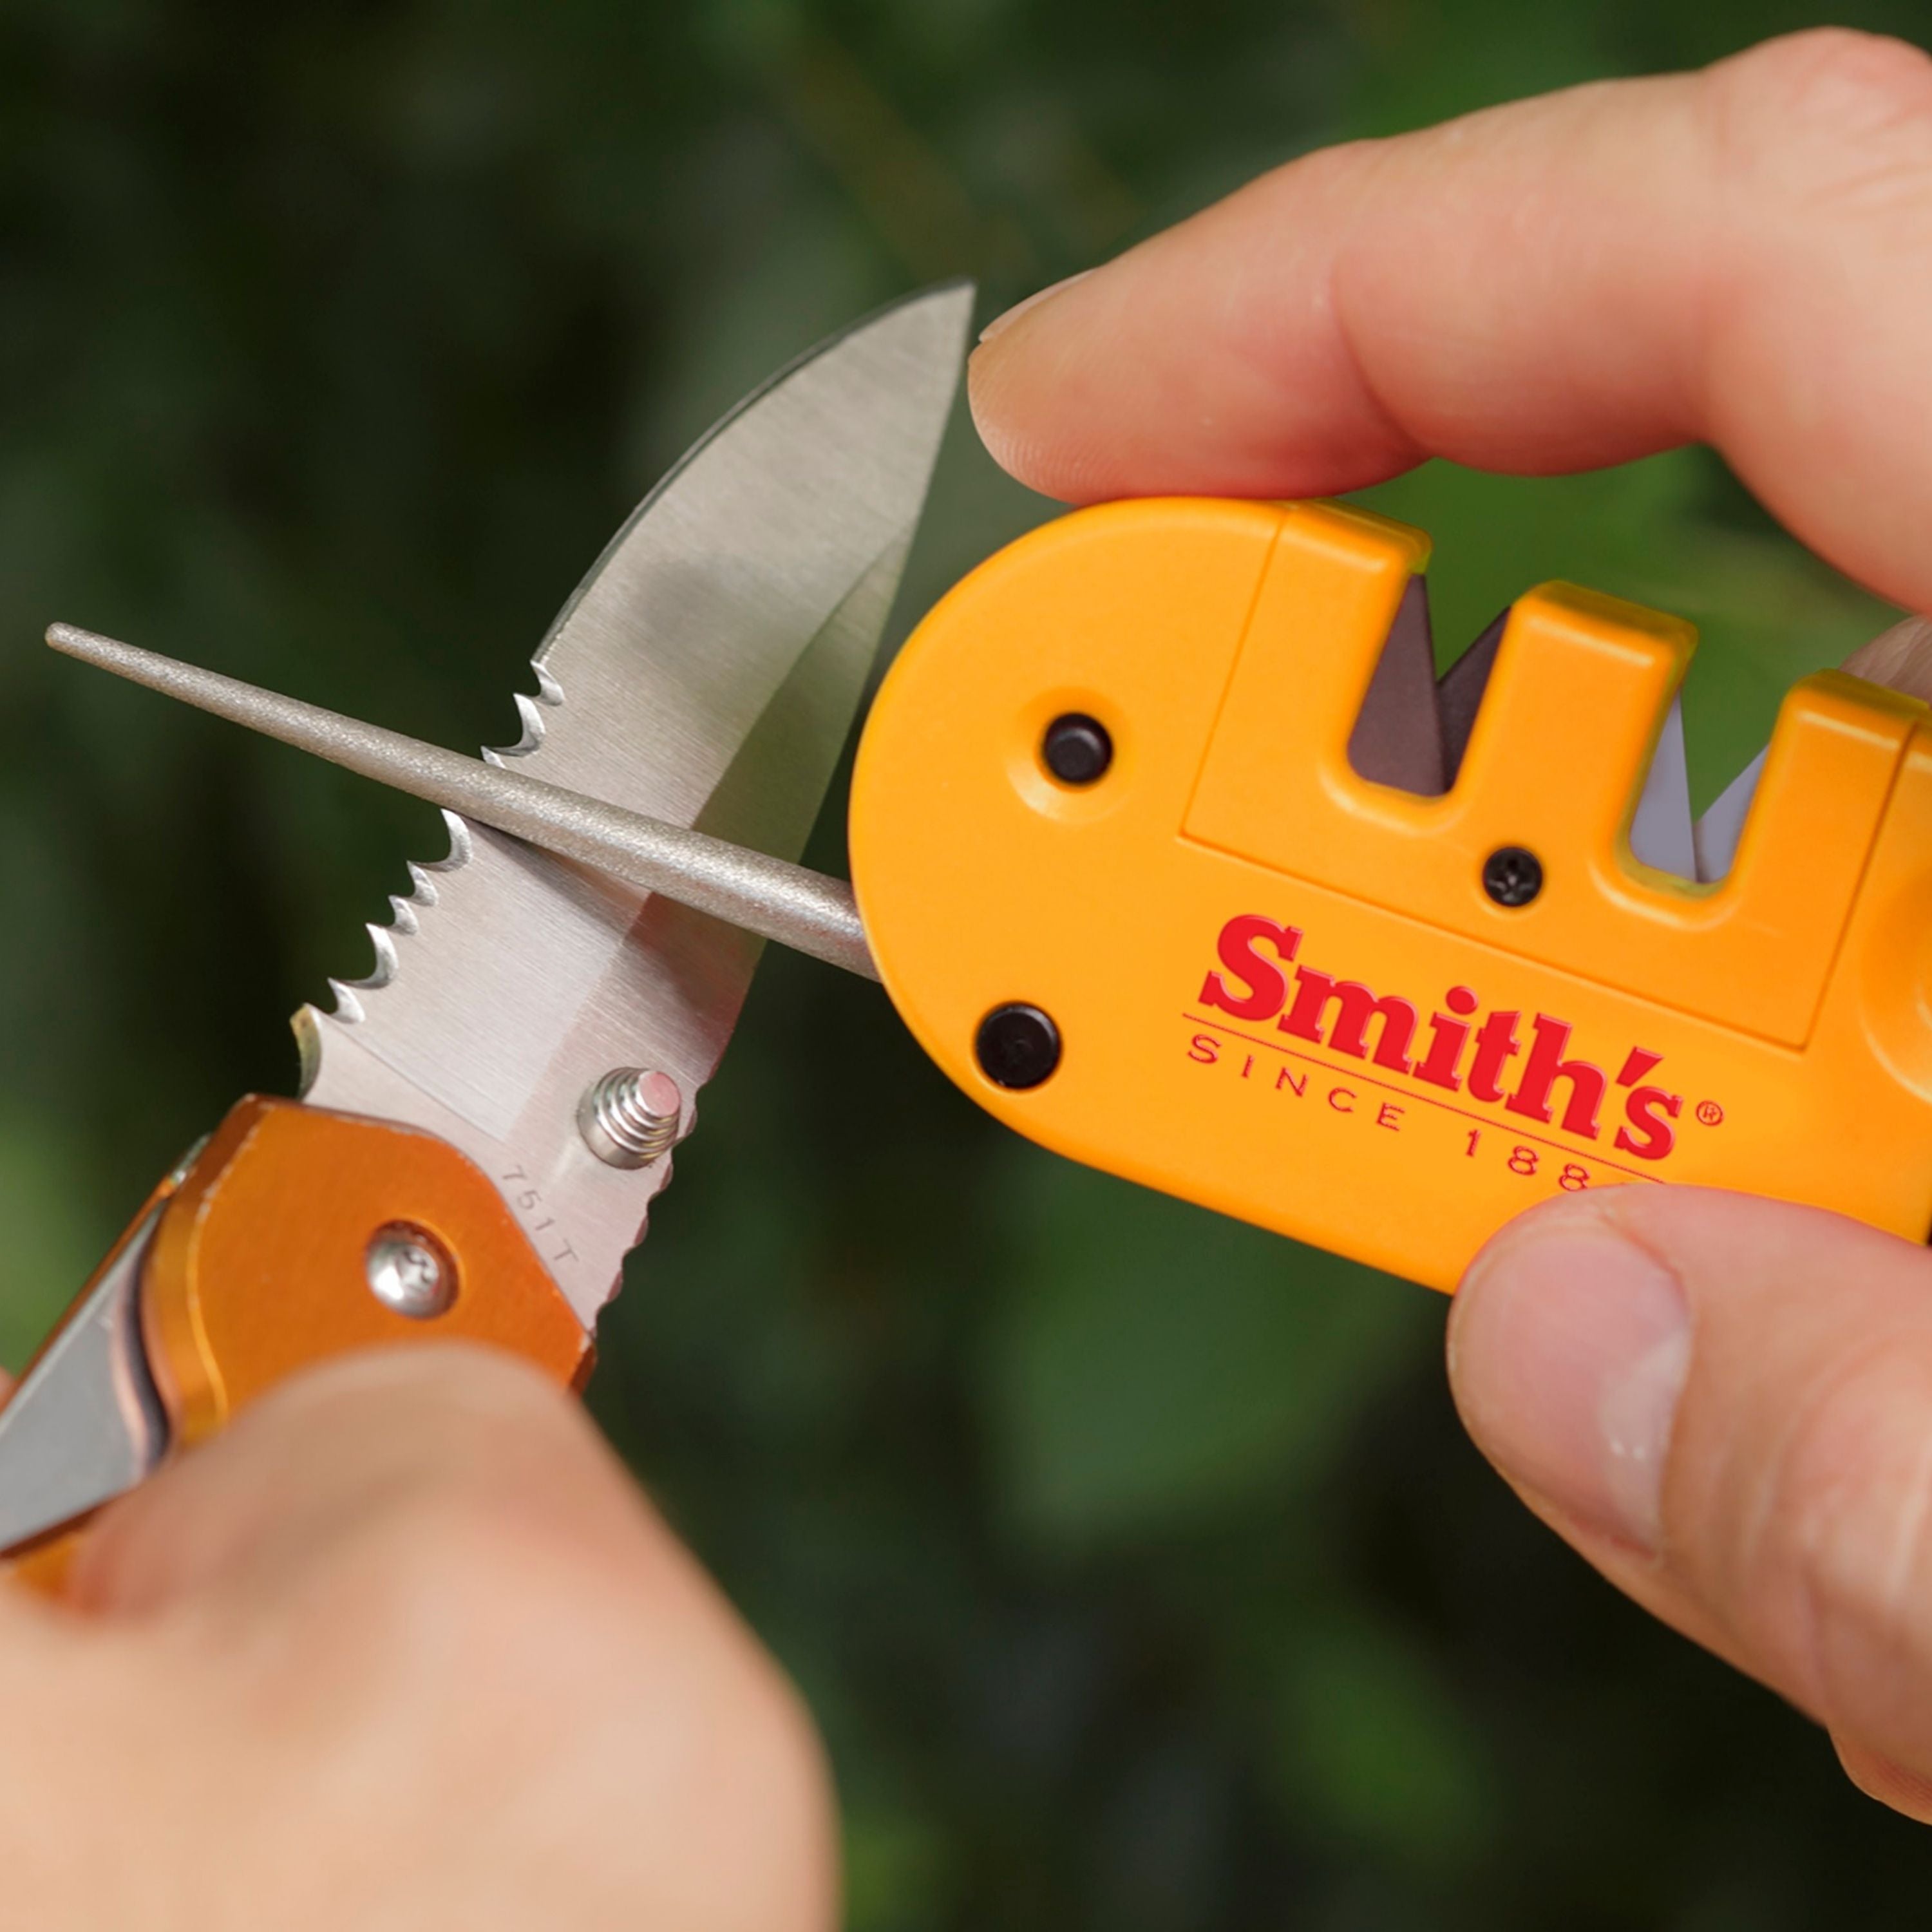 "Pocket pal x2" sharpener and outdoor tool